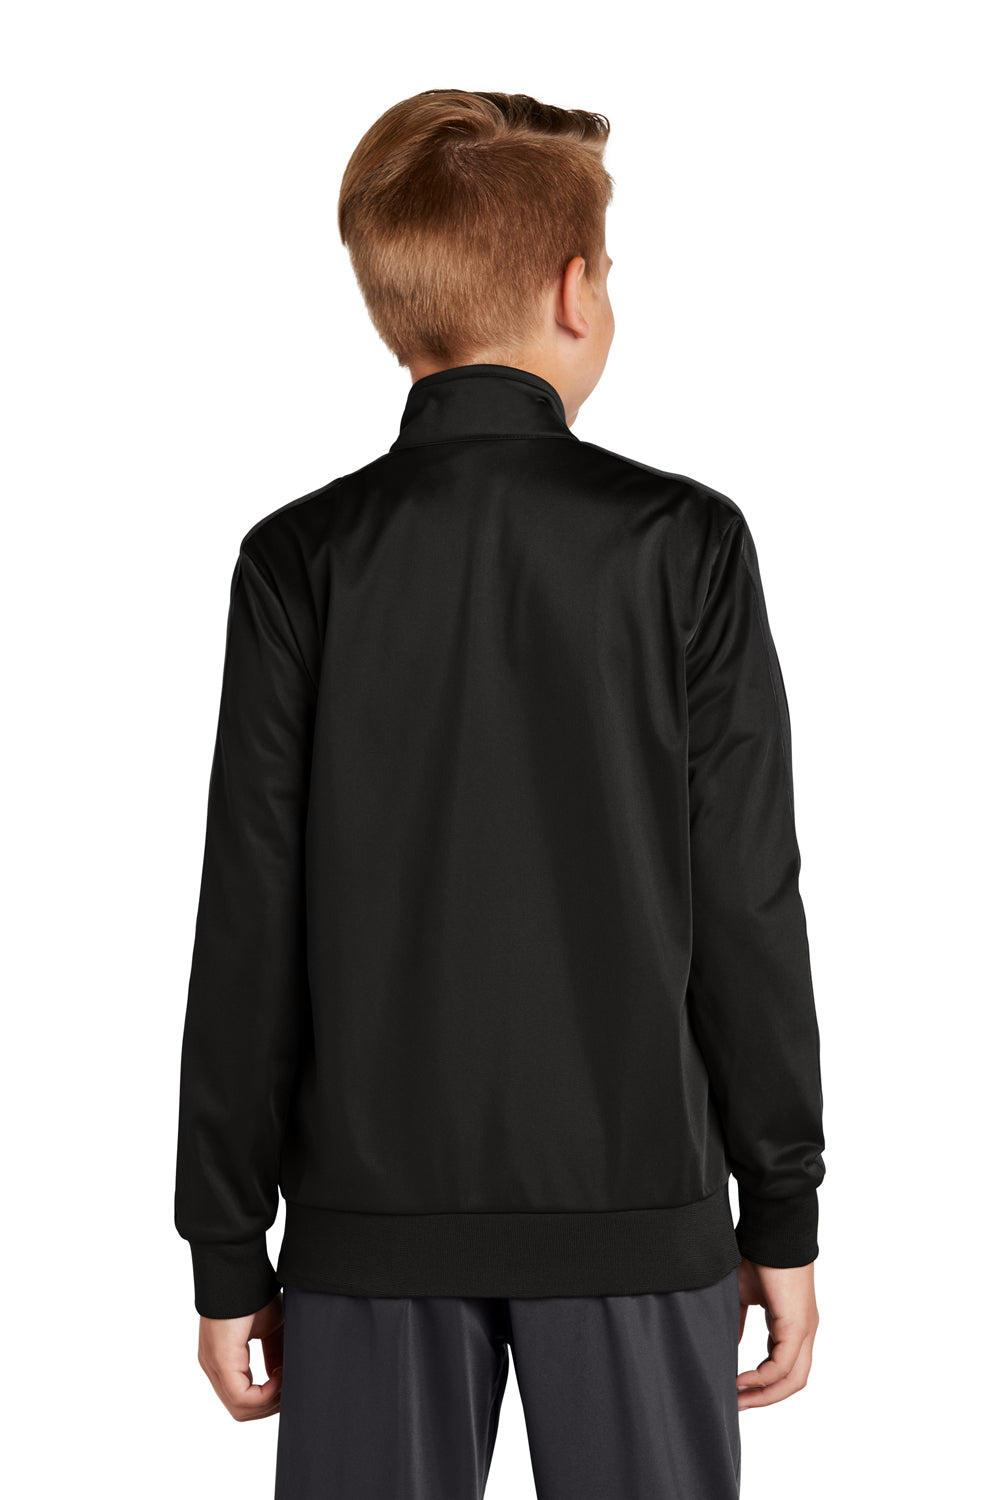 Sport-Tek Youth Full Zip Track Jacket Black Side